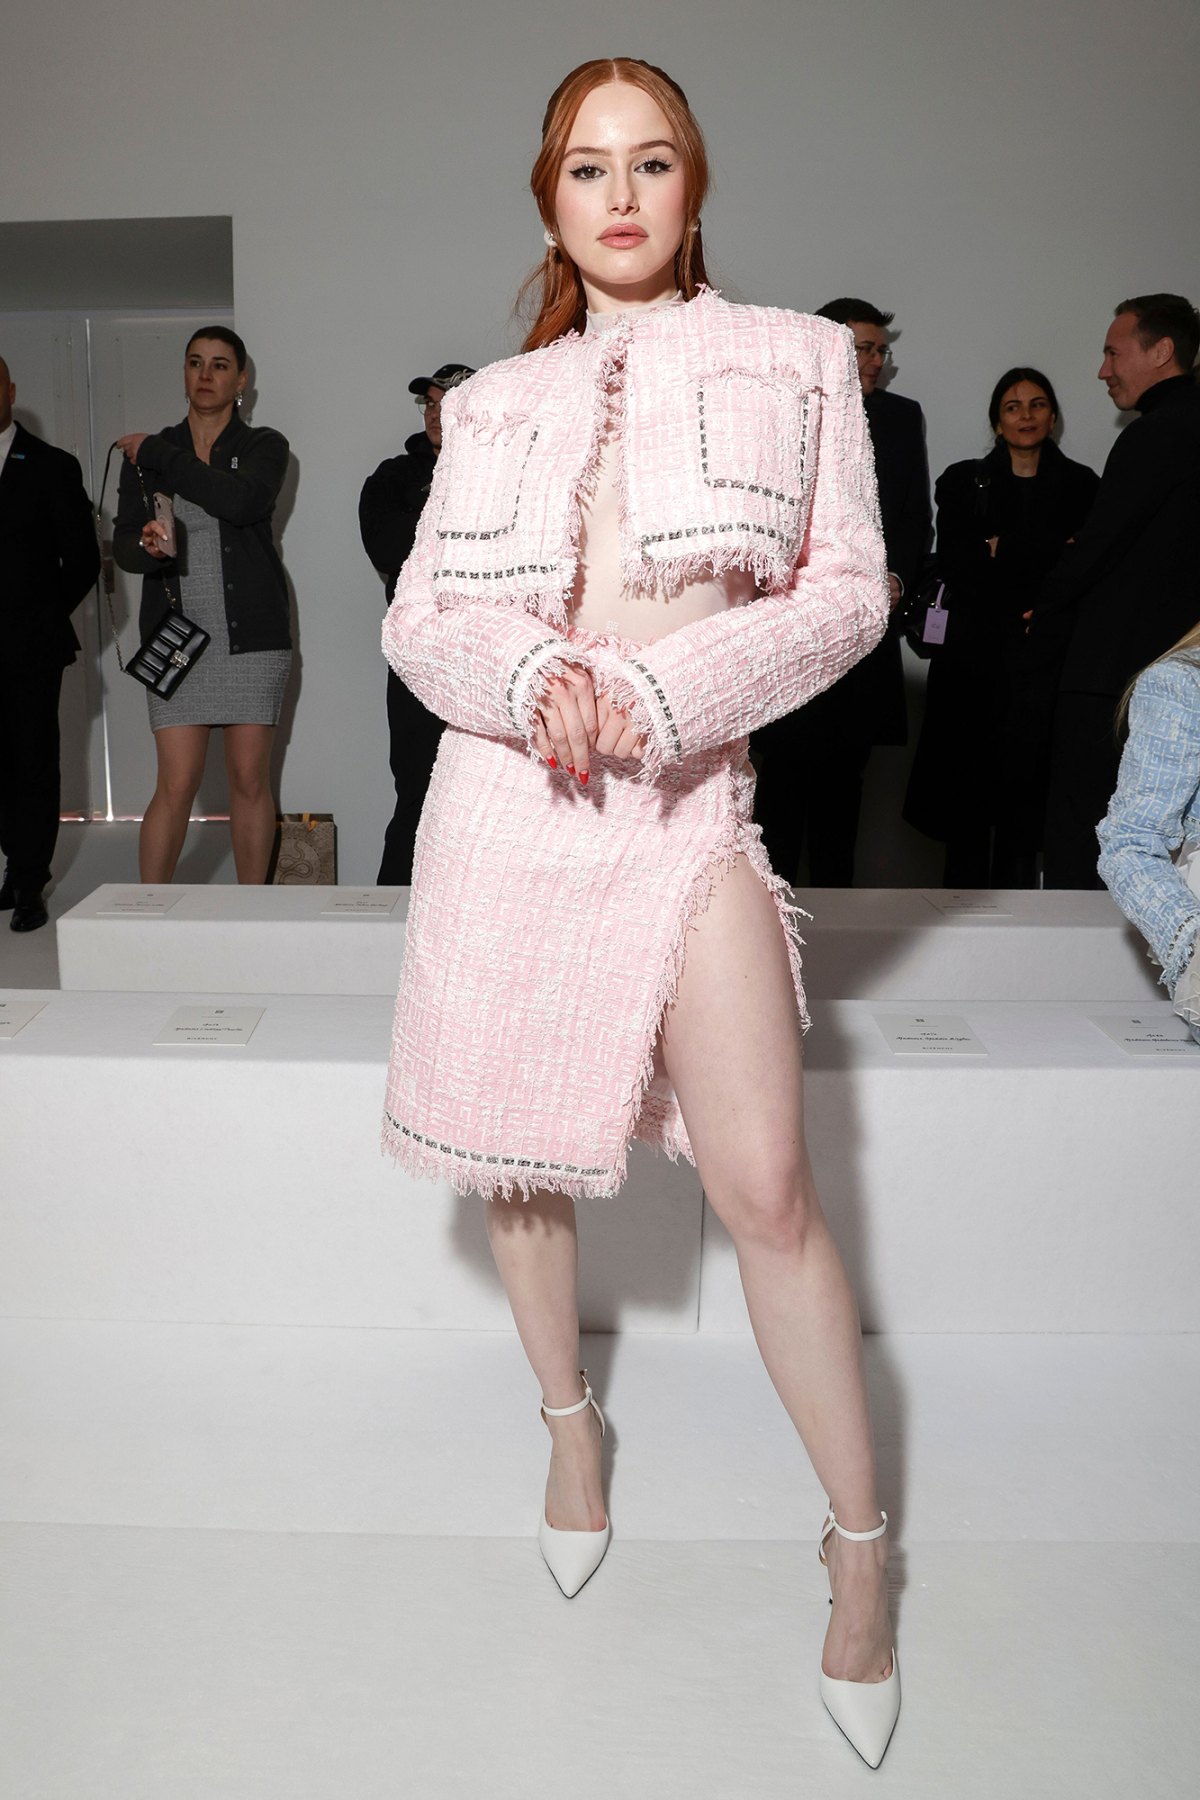 Venus Williams Looks Edgy in Leather Minidress & Louis Vuitton